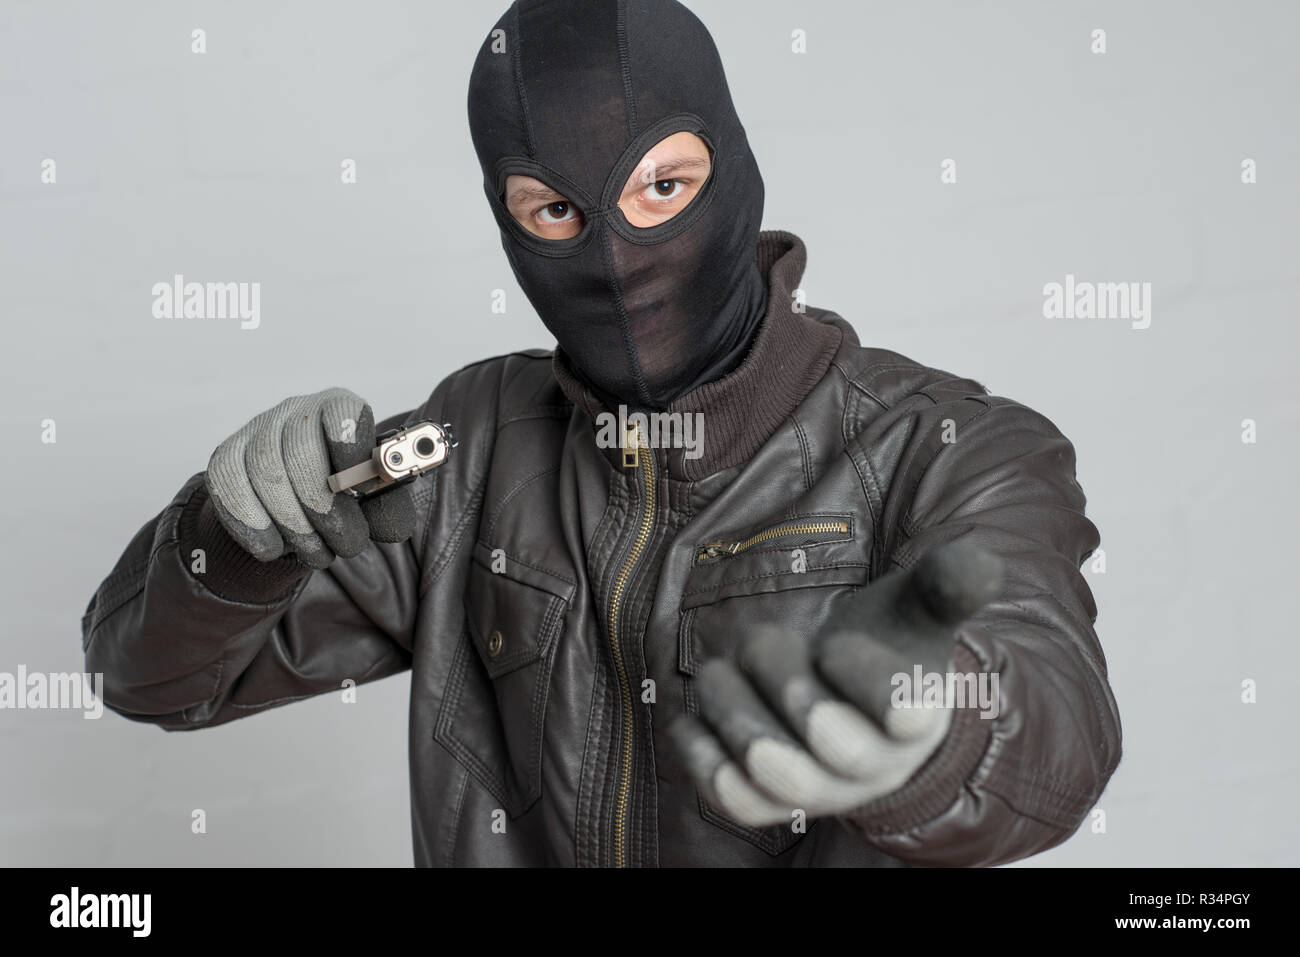 burglar threatening with weapon Stock Photo